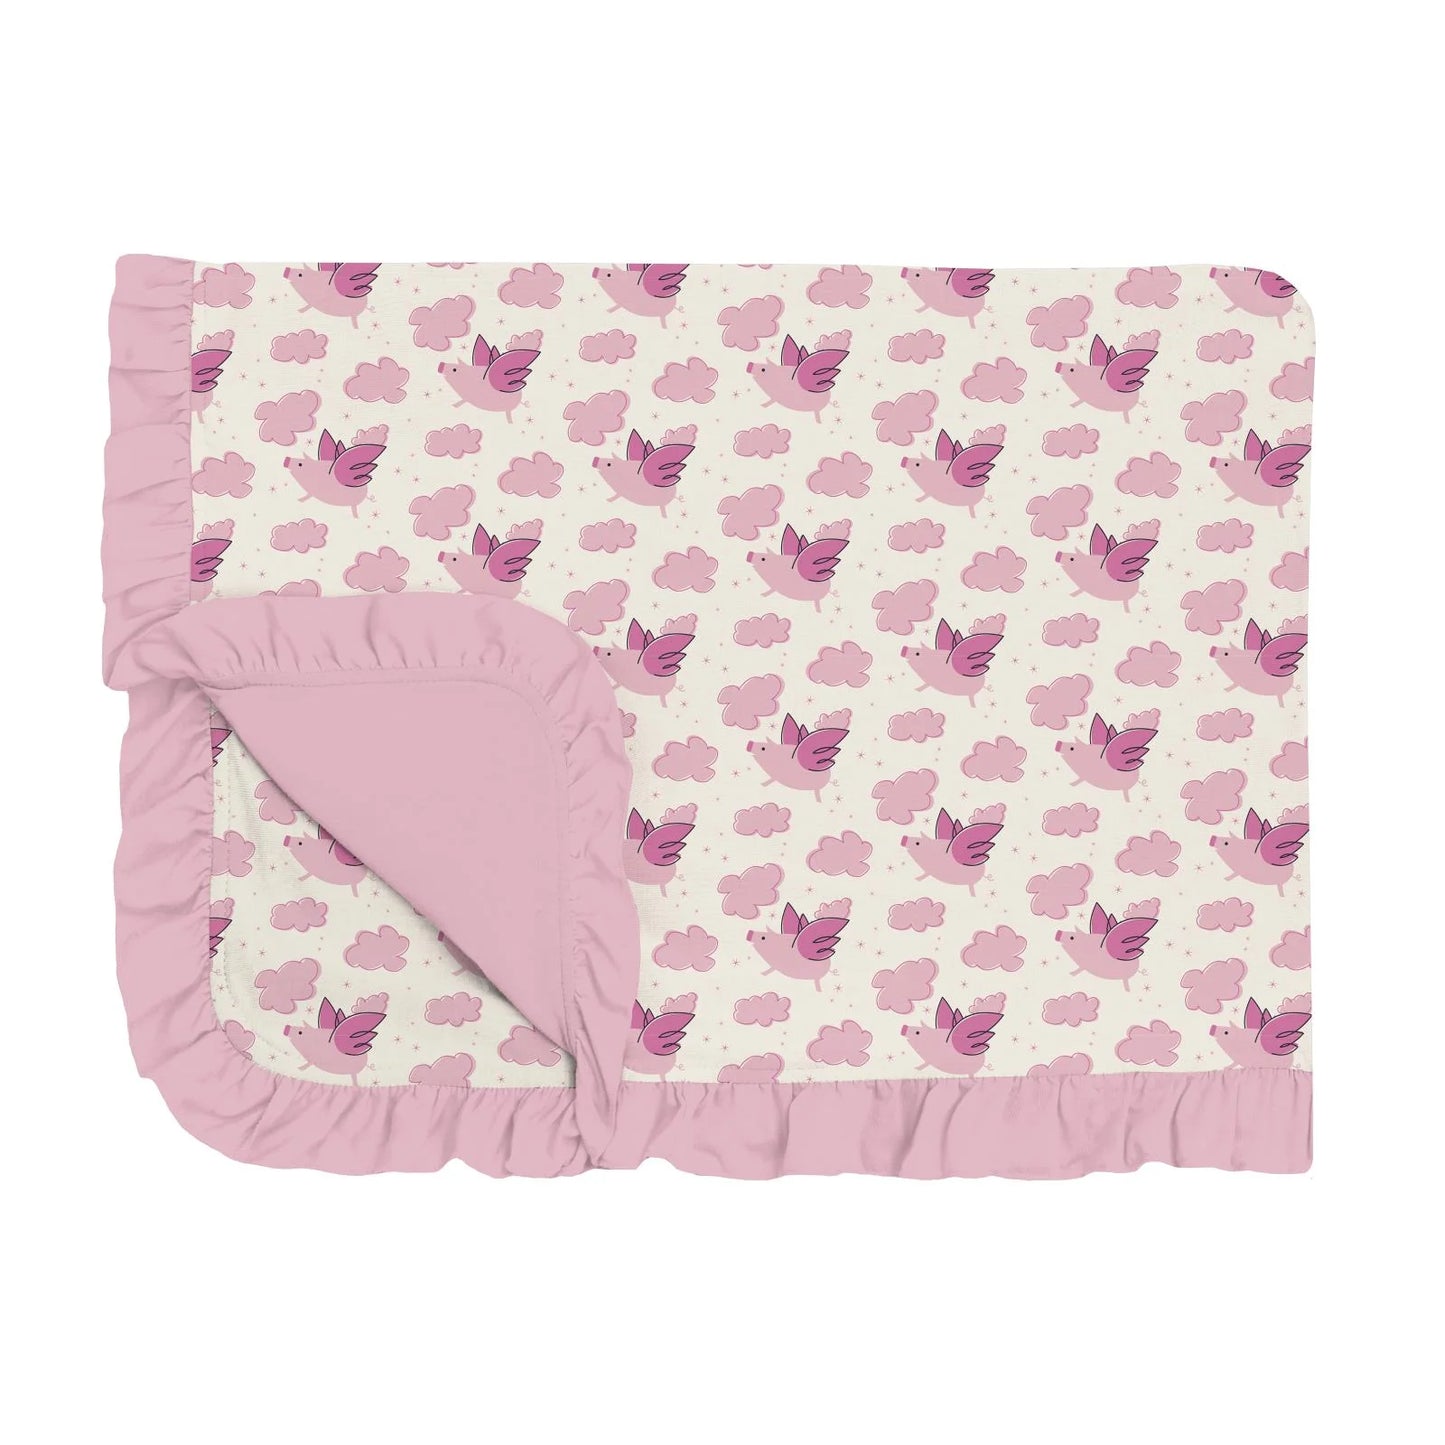 Kickee Natural Flying Pigs | Print Ruffle Toddler Blanket